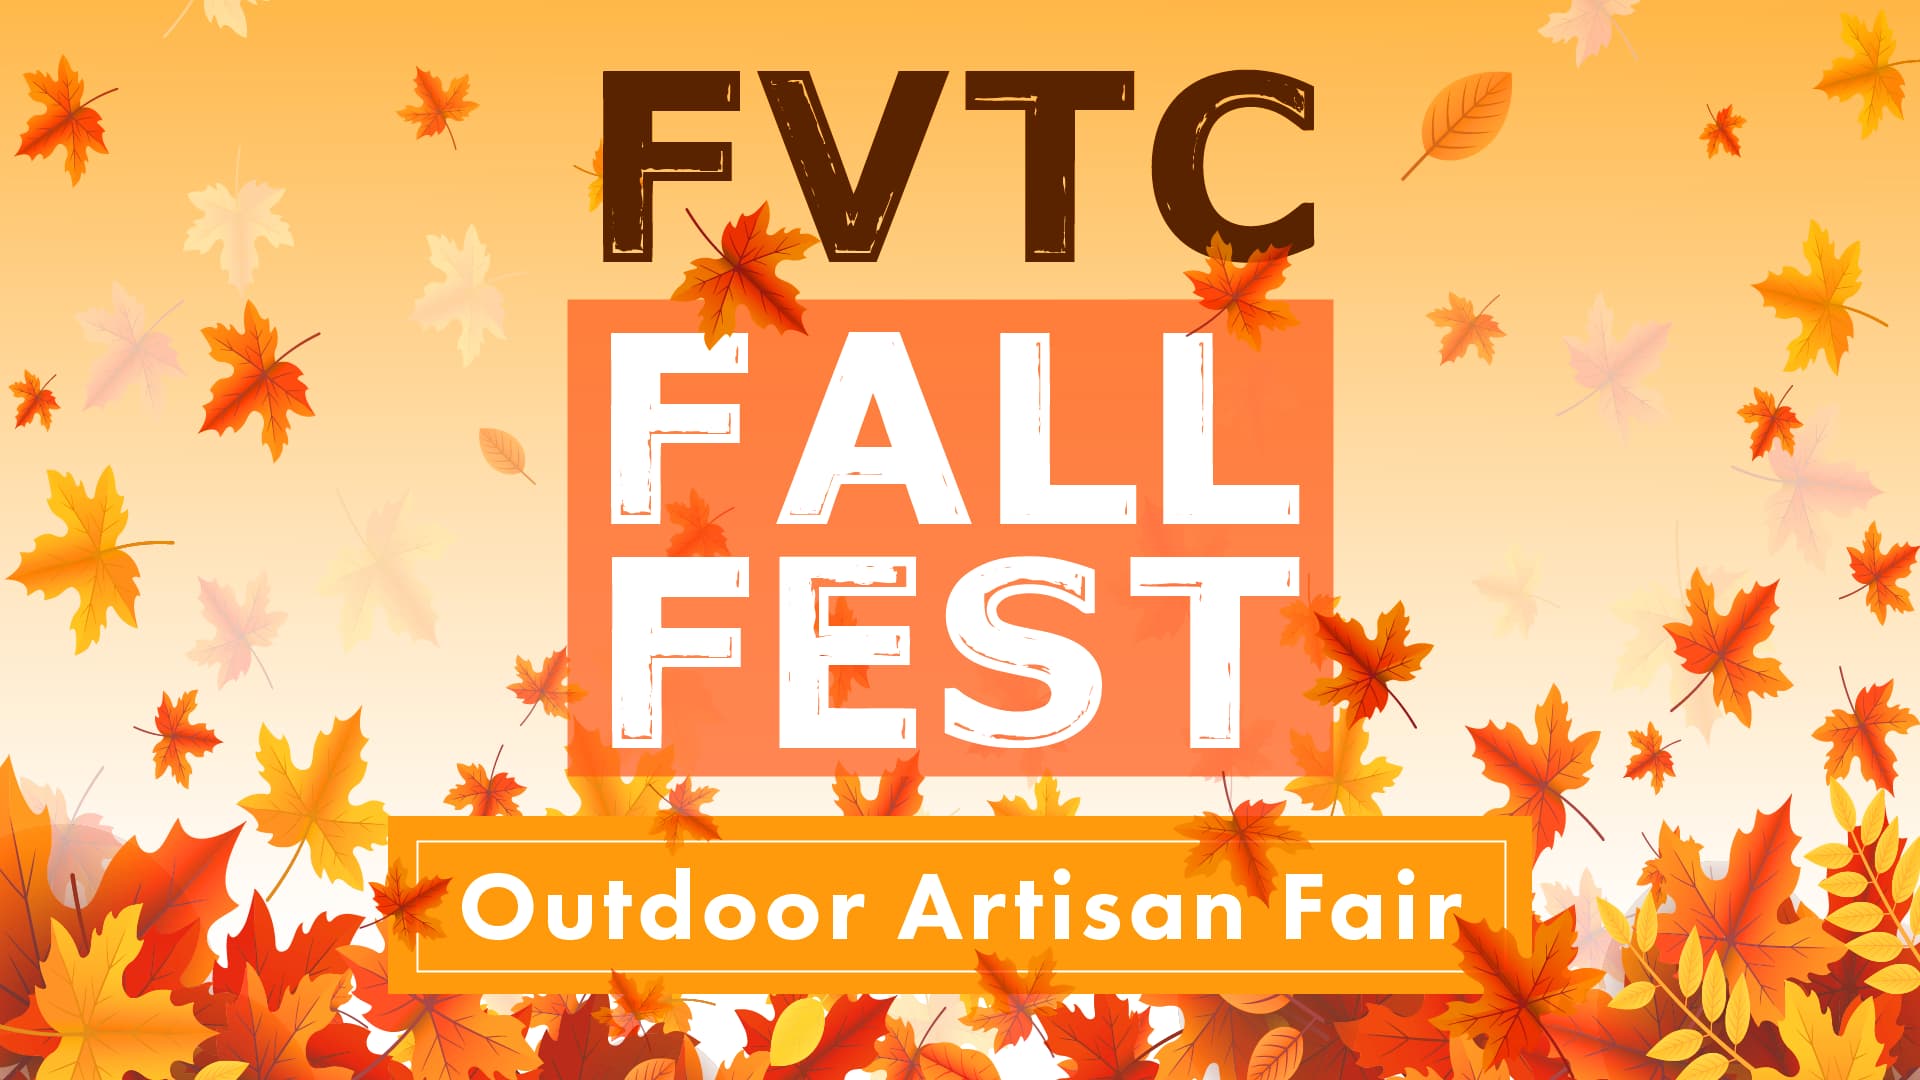 Fall Festival at FVTC